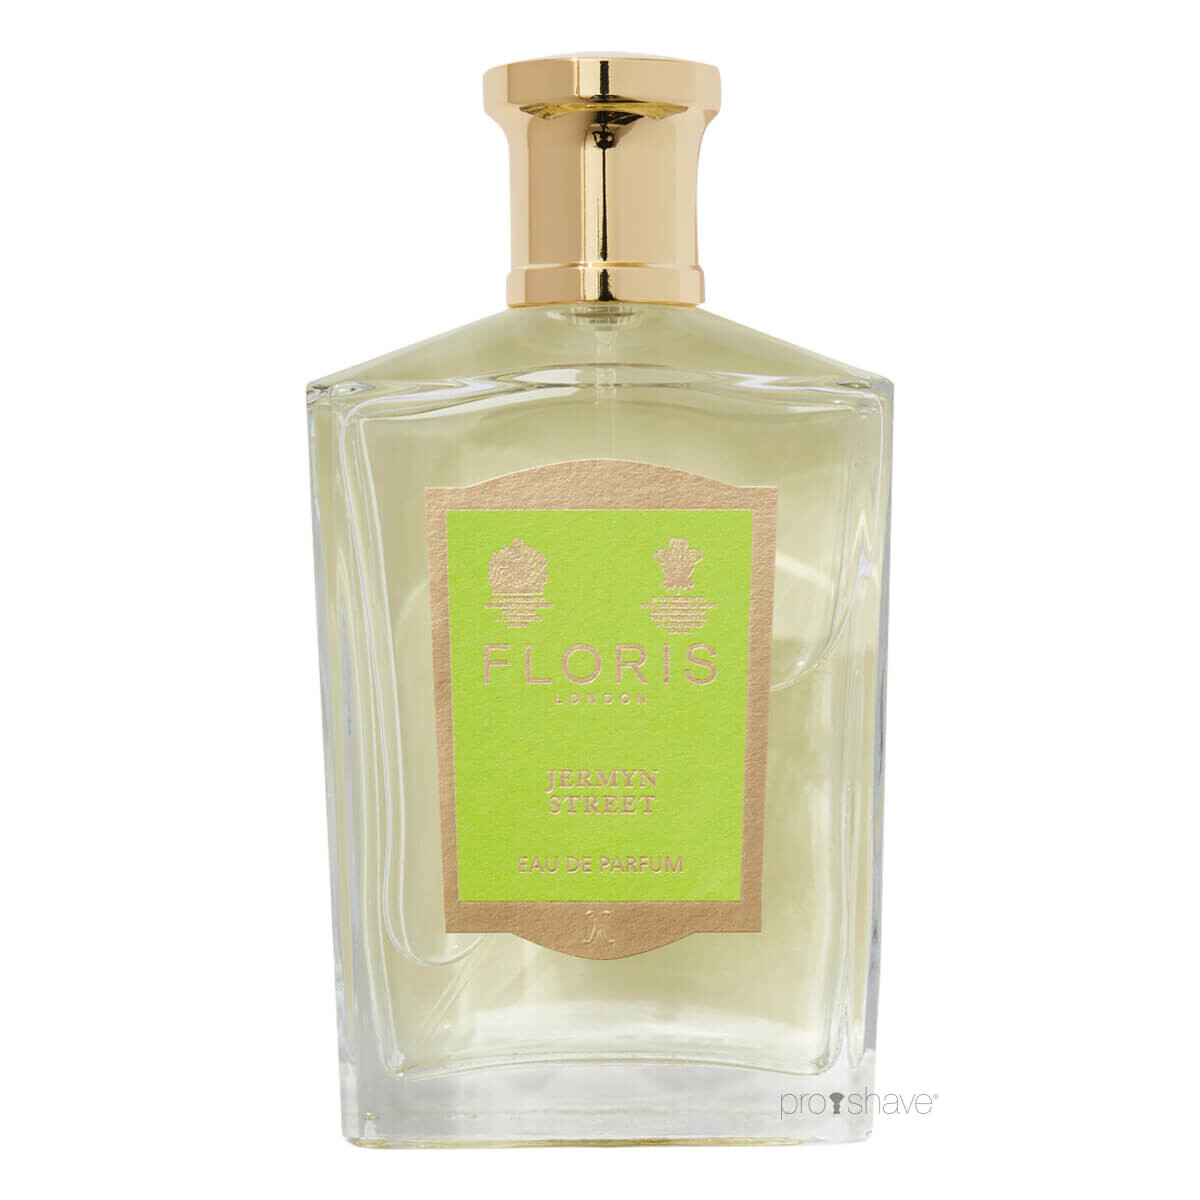 Floris Jermyn Street, Eau de Parfum, 100 ml.